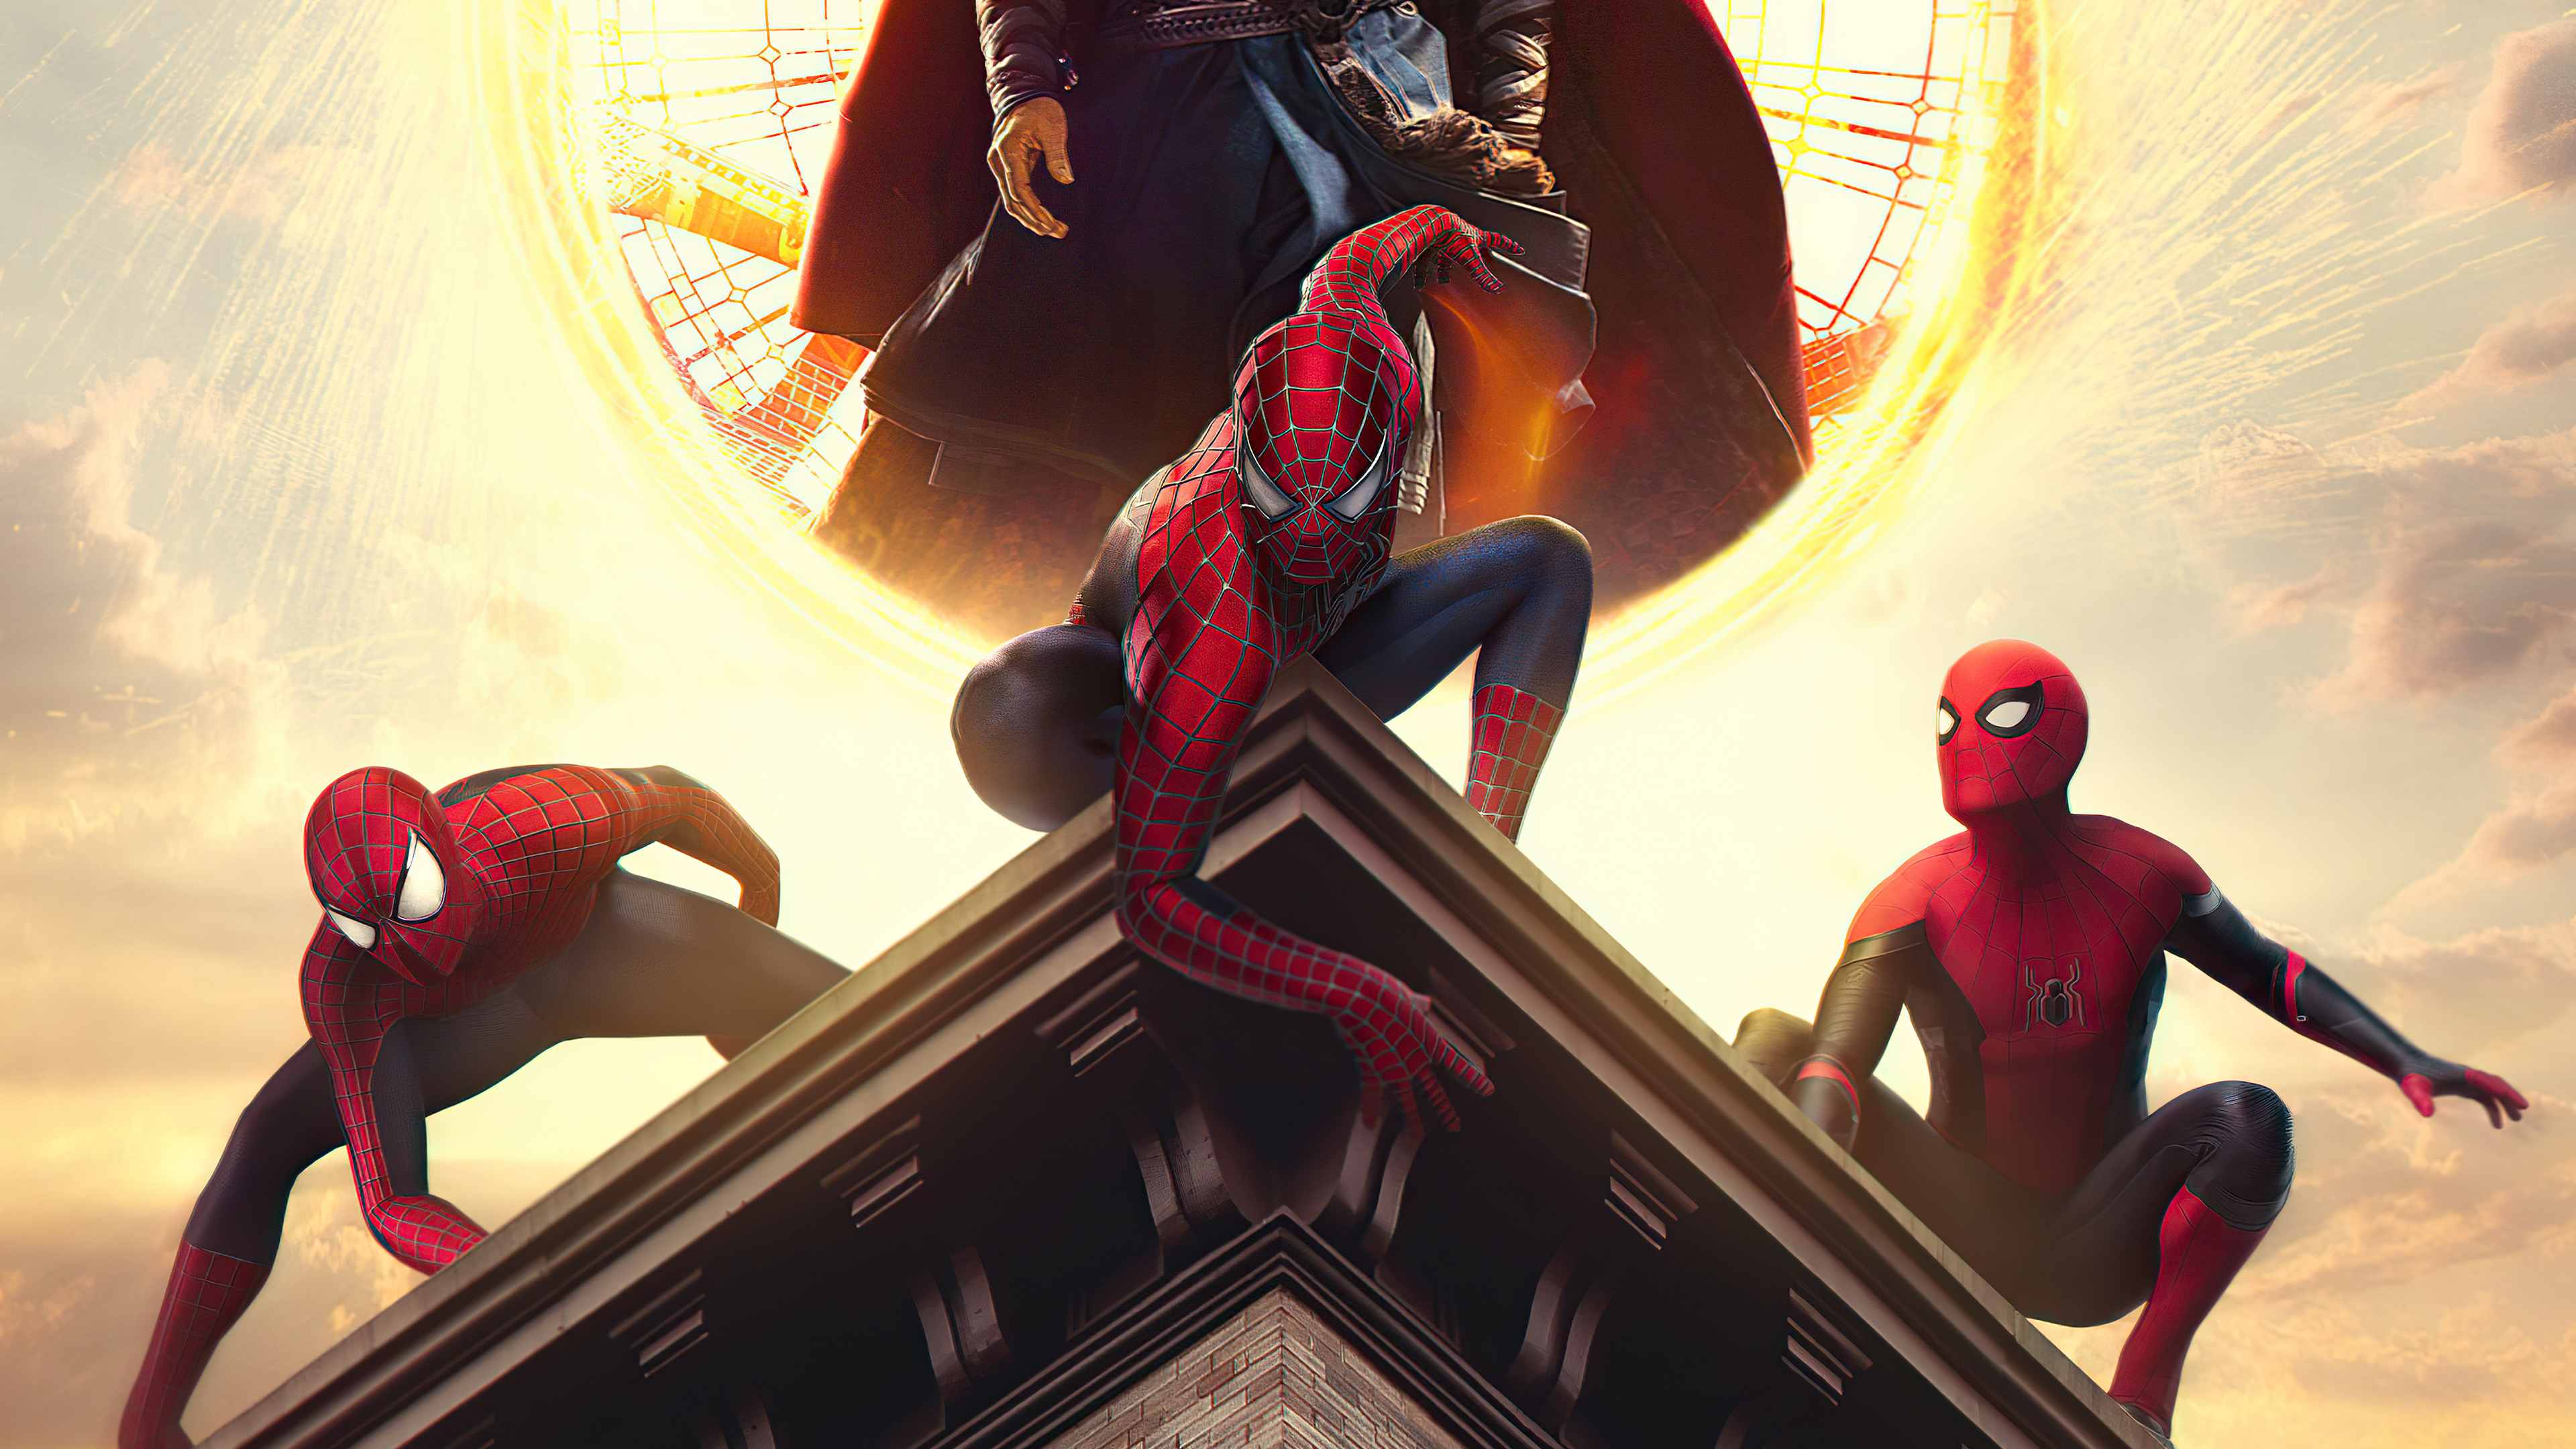 Spider-Man: No Way Home 4k Ultra HD Wallpaper by Mizuri